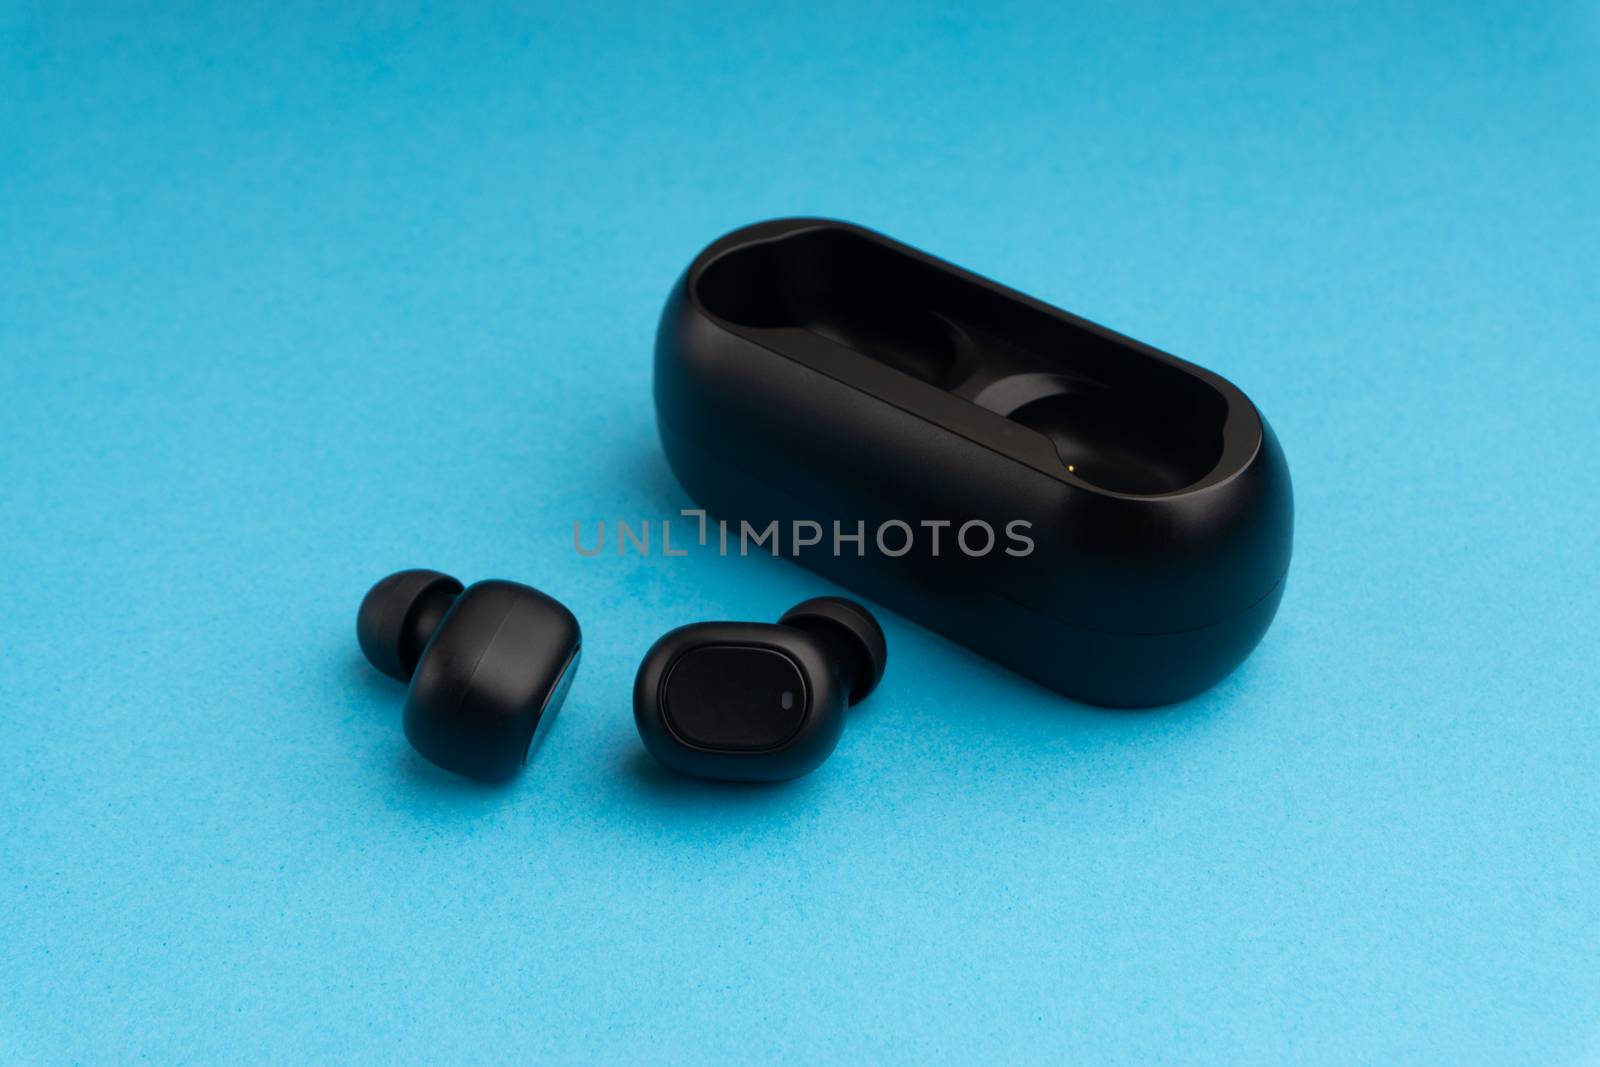 Wireless earbuds or earphones on blue background by silverwings